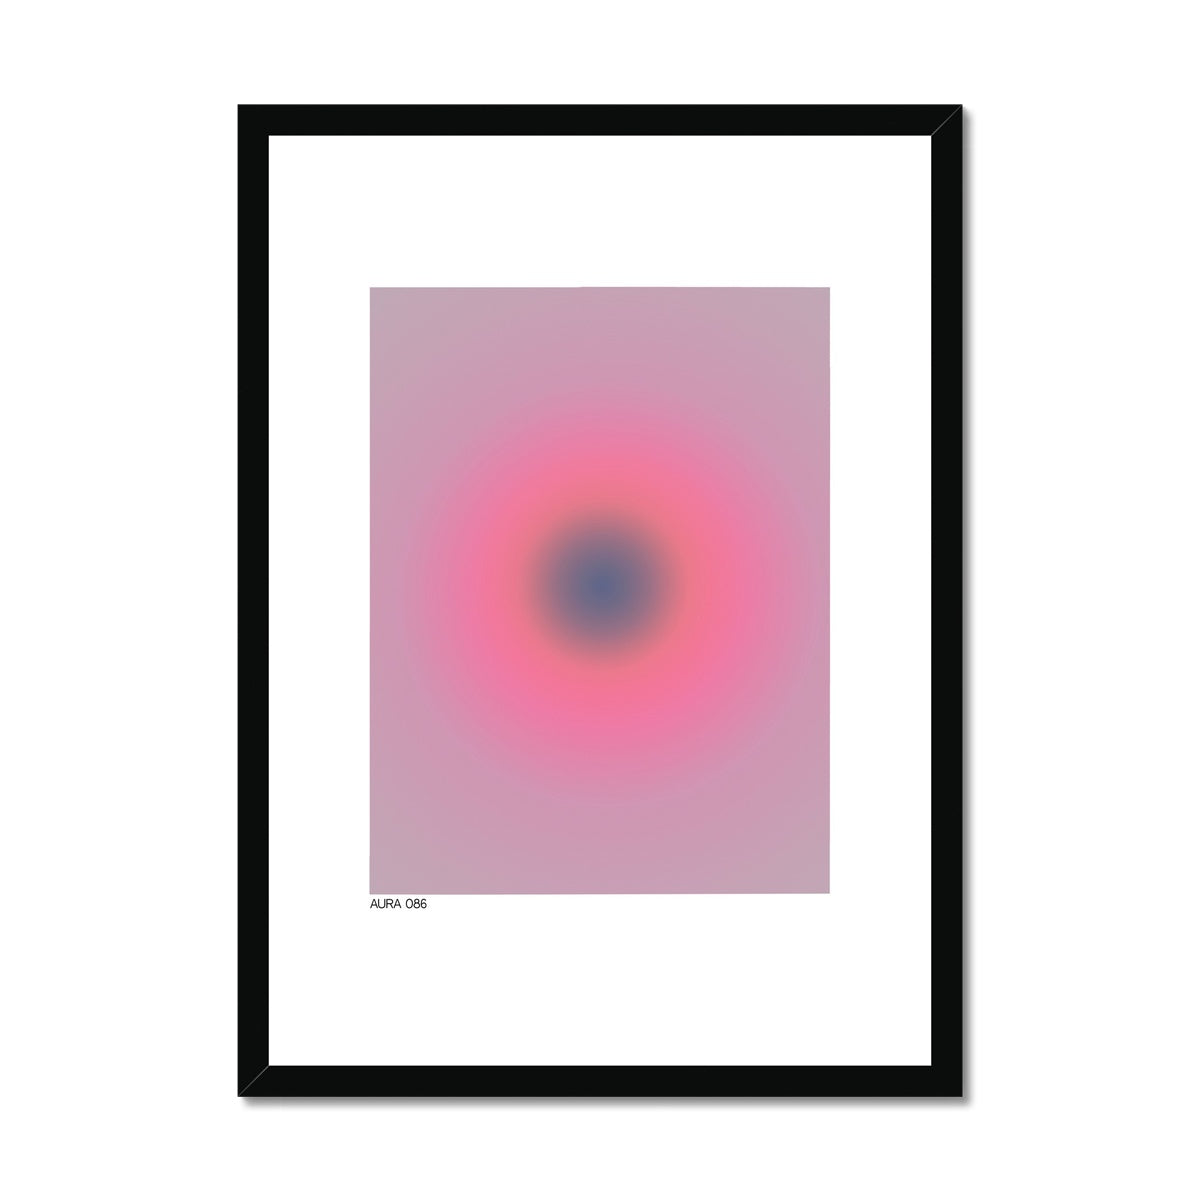 aura 086 Framed & Mounted Print